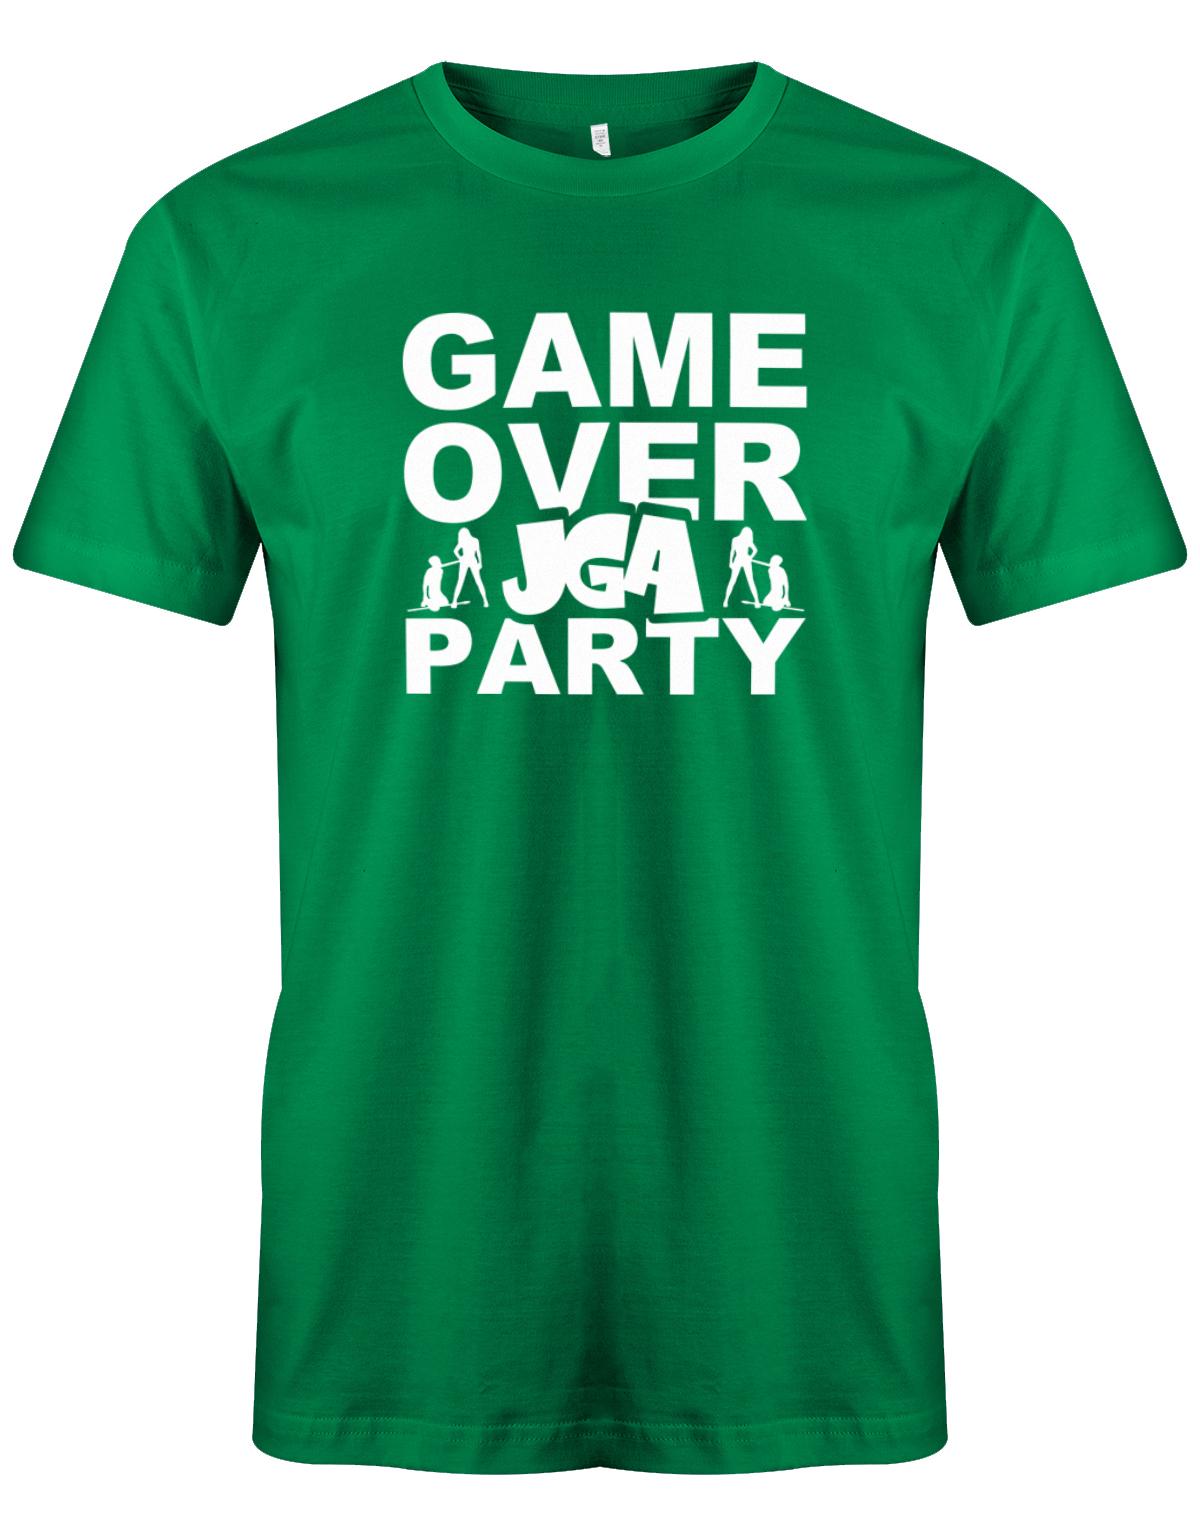 Game-Over-JGA-Party-Herren-Shirt-Gruen